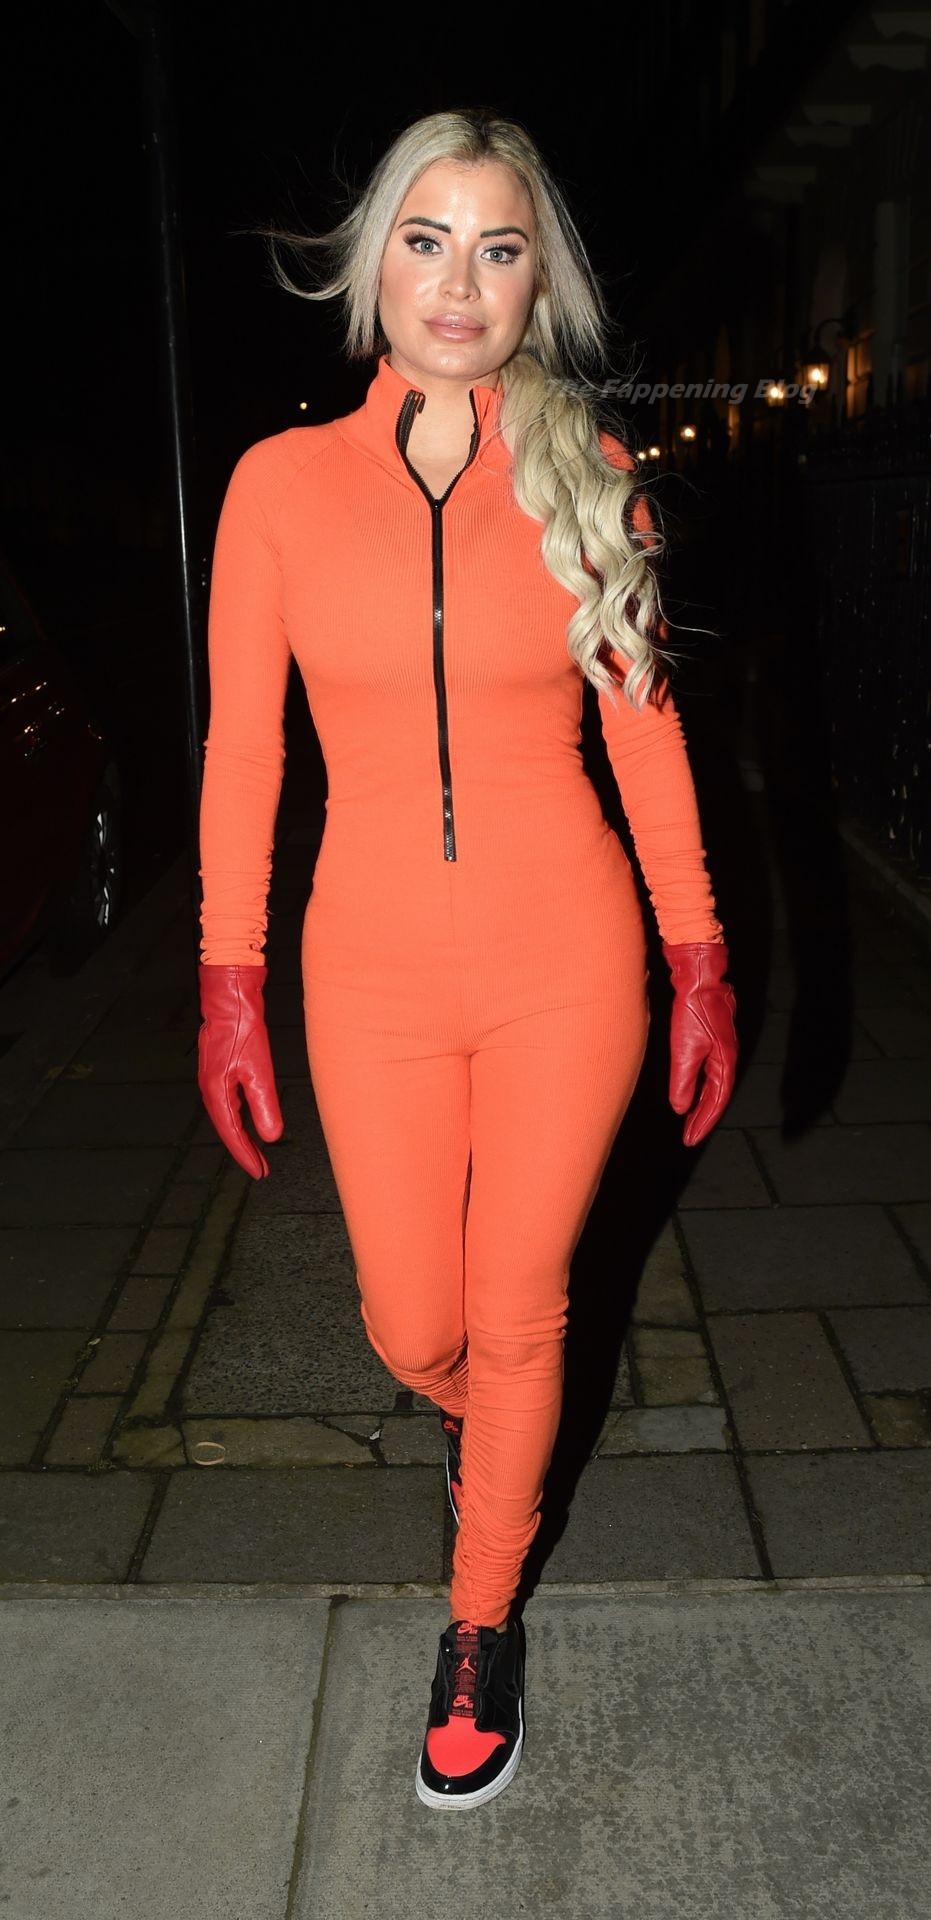 Carla Howe is Seen in an Orange Jumpsuit (17 Photos)